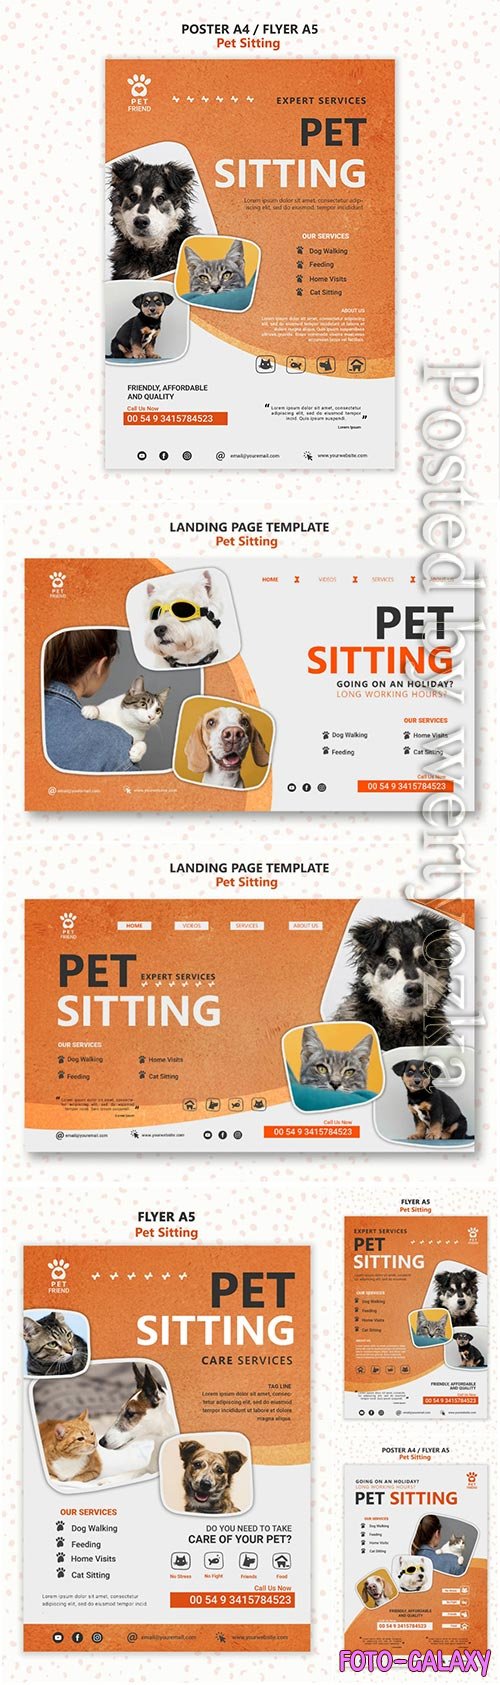 Pet sitting concept flyer template psd